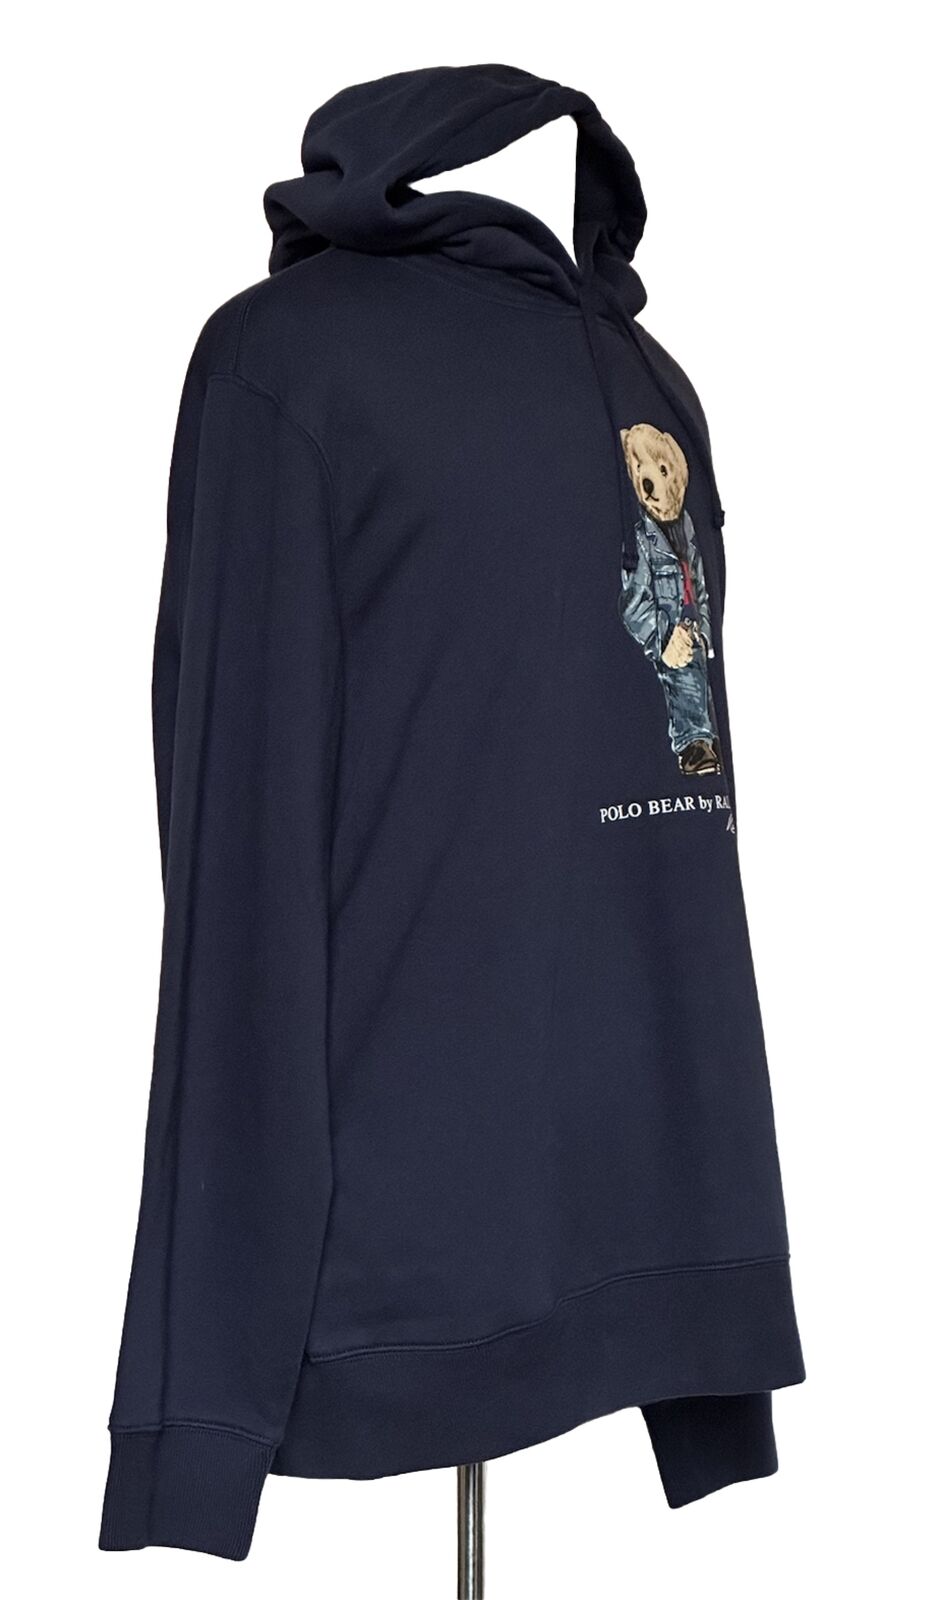 NWT $188 Polo Ralph Lauren Bear Sweatshirt with Hoodie Blue 2XL/2TTG